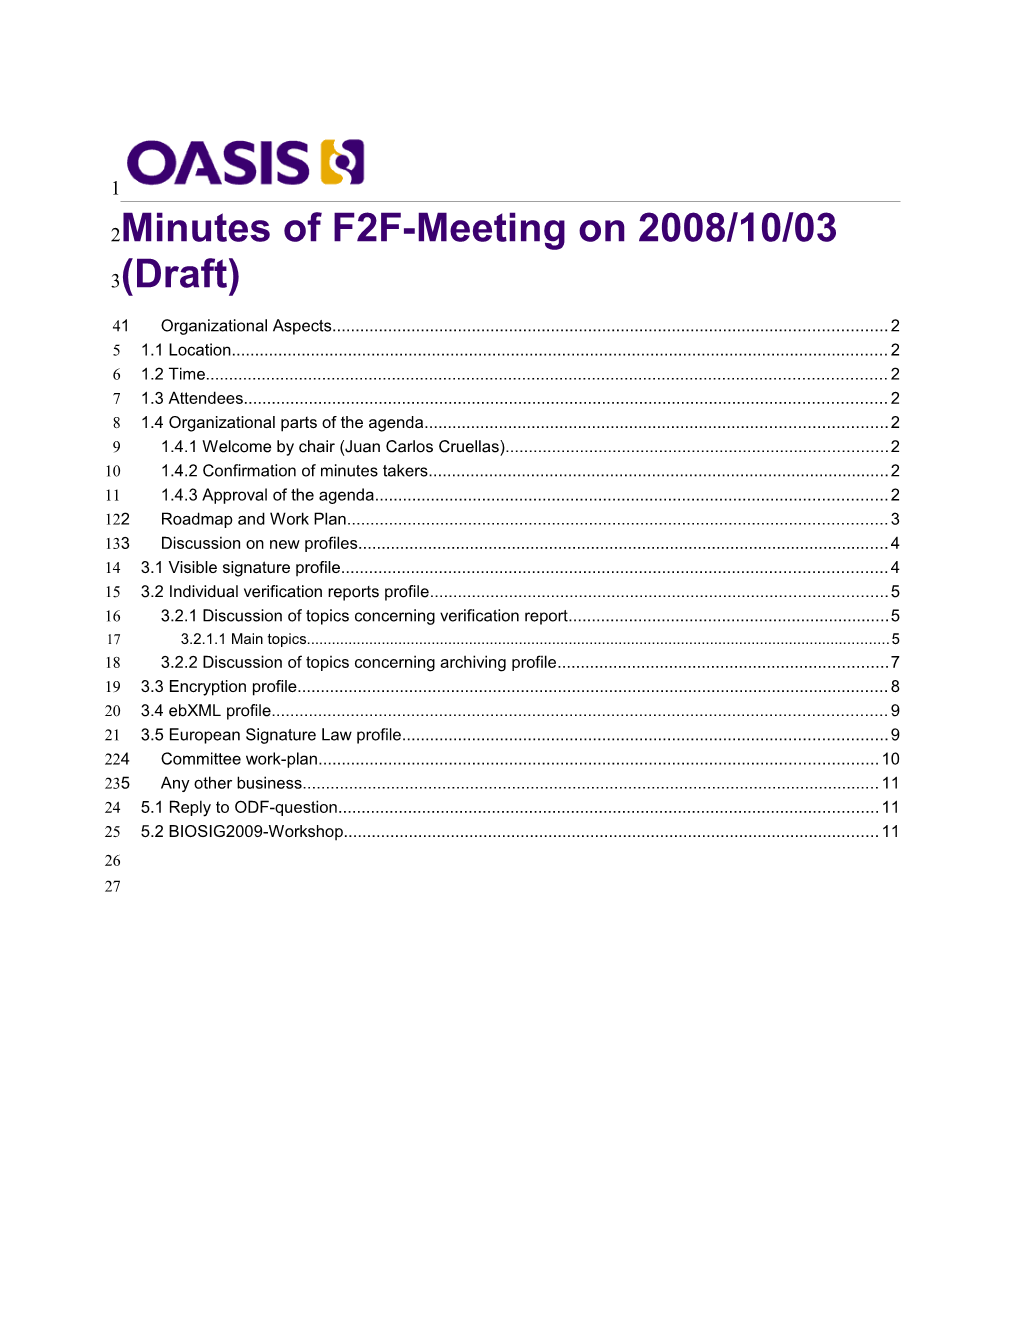 OASIS Ebxml Messaging Transport Binding for Digital Signature Services